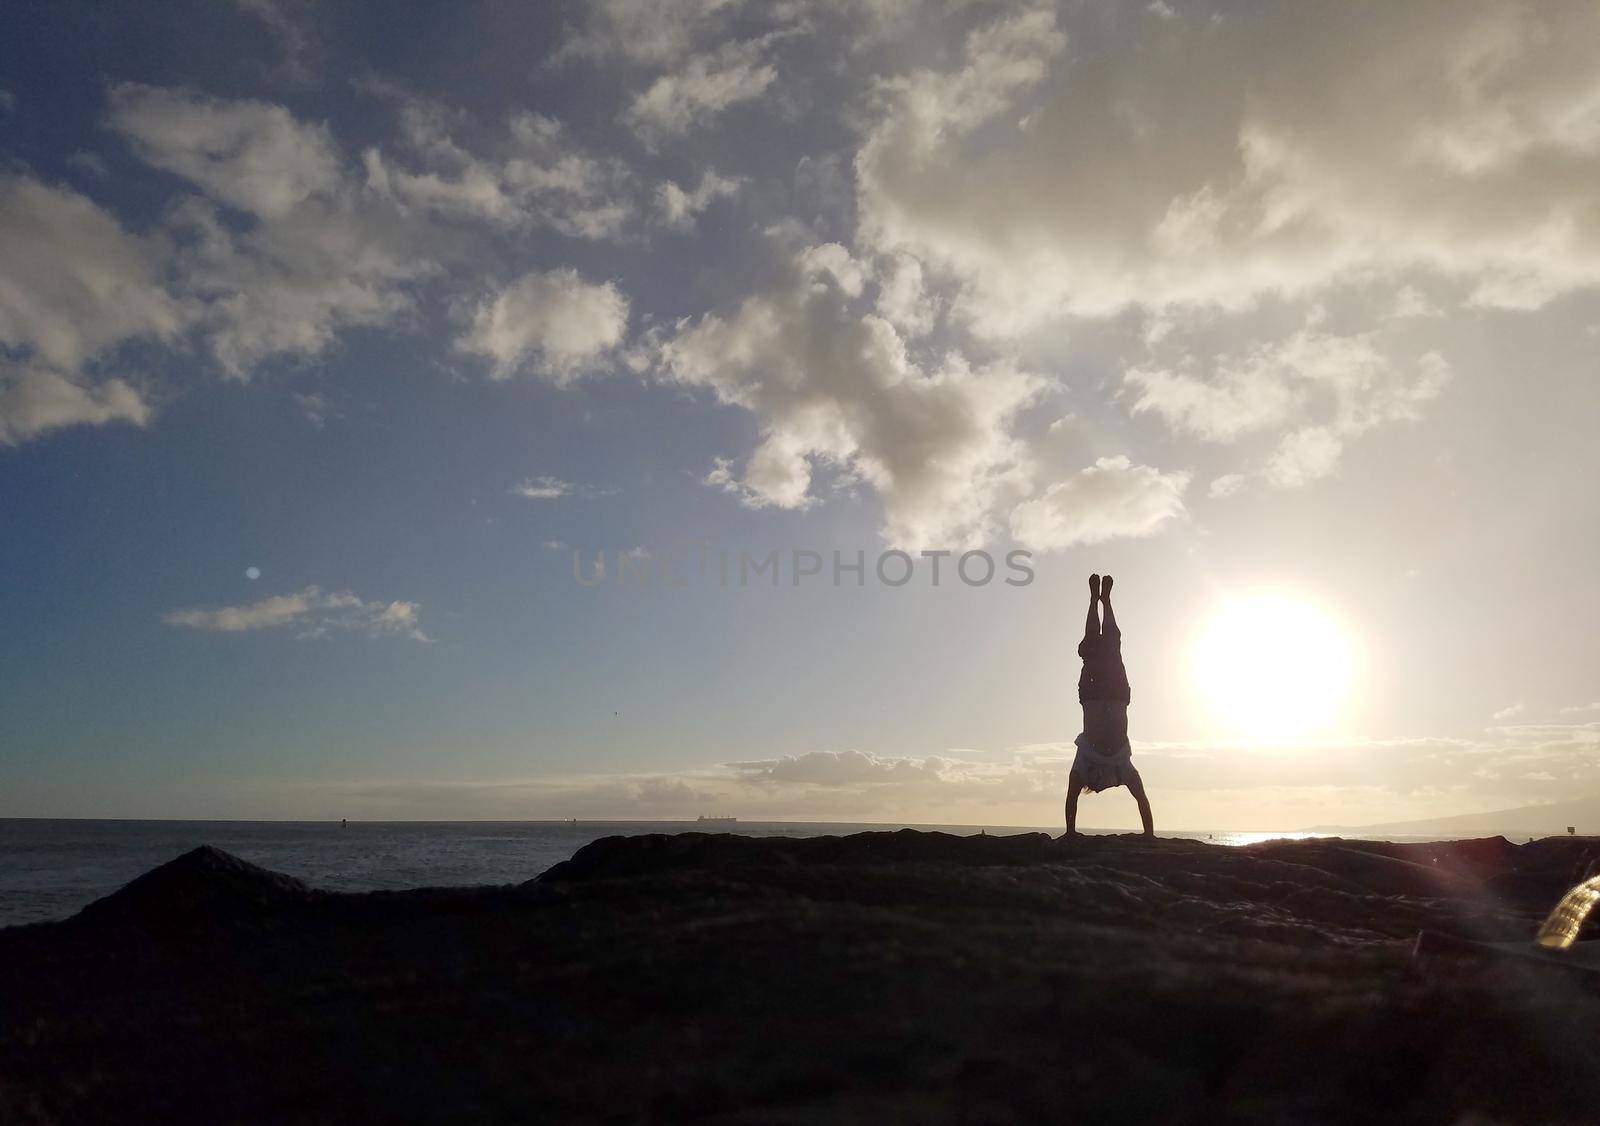 Man Handstanding on coastal rocks at sunset by EricGBVD